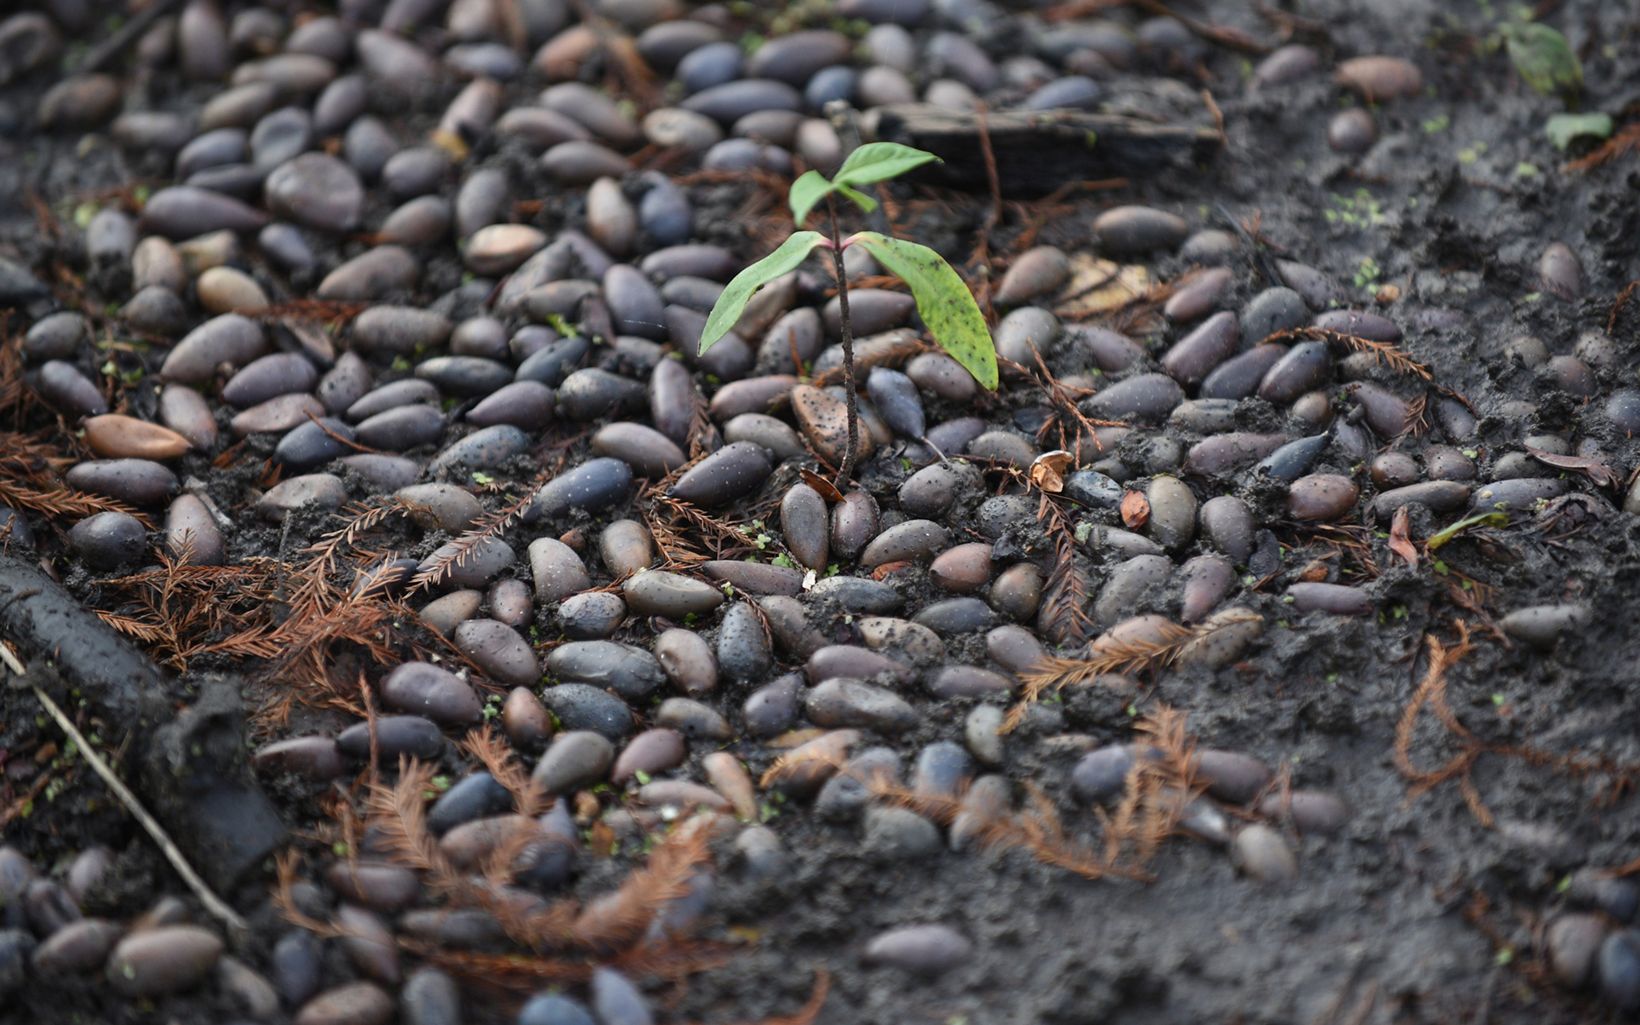 Seedling Seedlings grow on the ground by Mermet Lake at the Cache River Wetlands Preserve. © Laura Stoecker